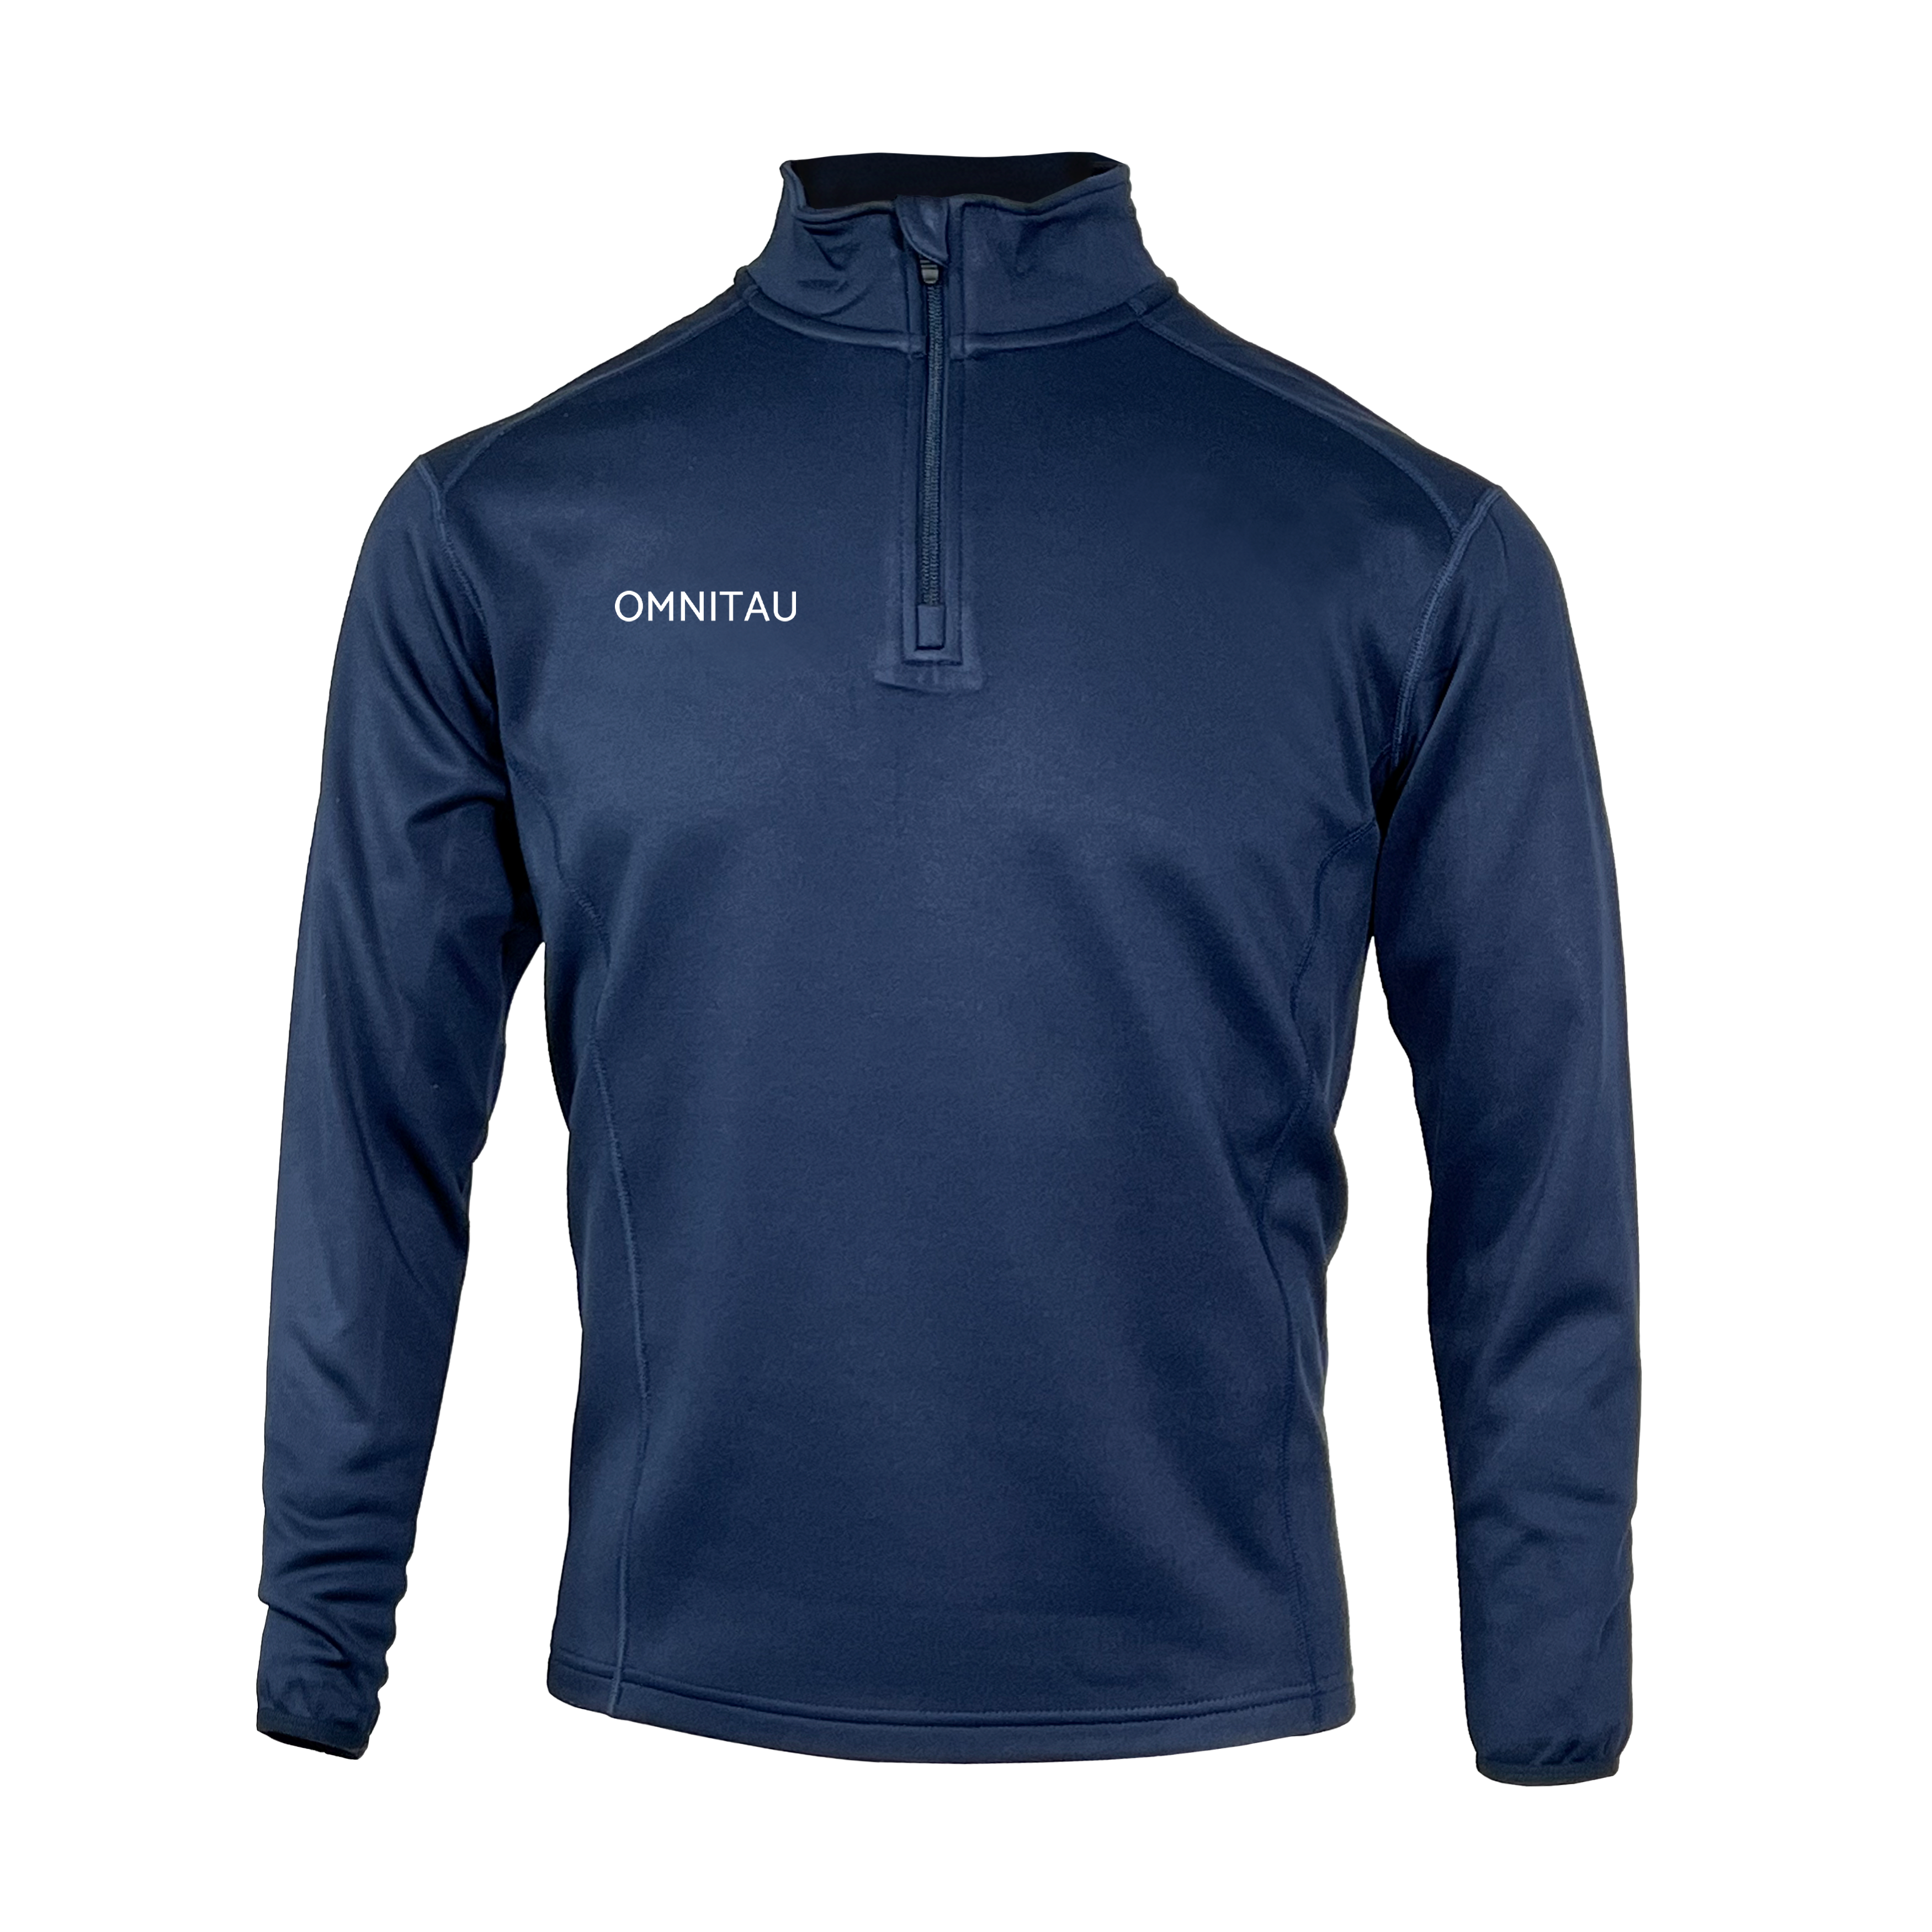 Omnitau Kid's Team Sports Recycled 1/4 Zip Mid Layer Sweatshirt - Navy